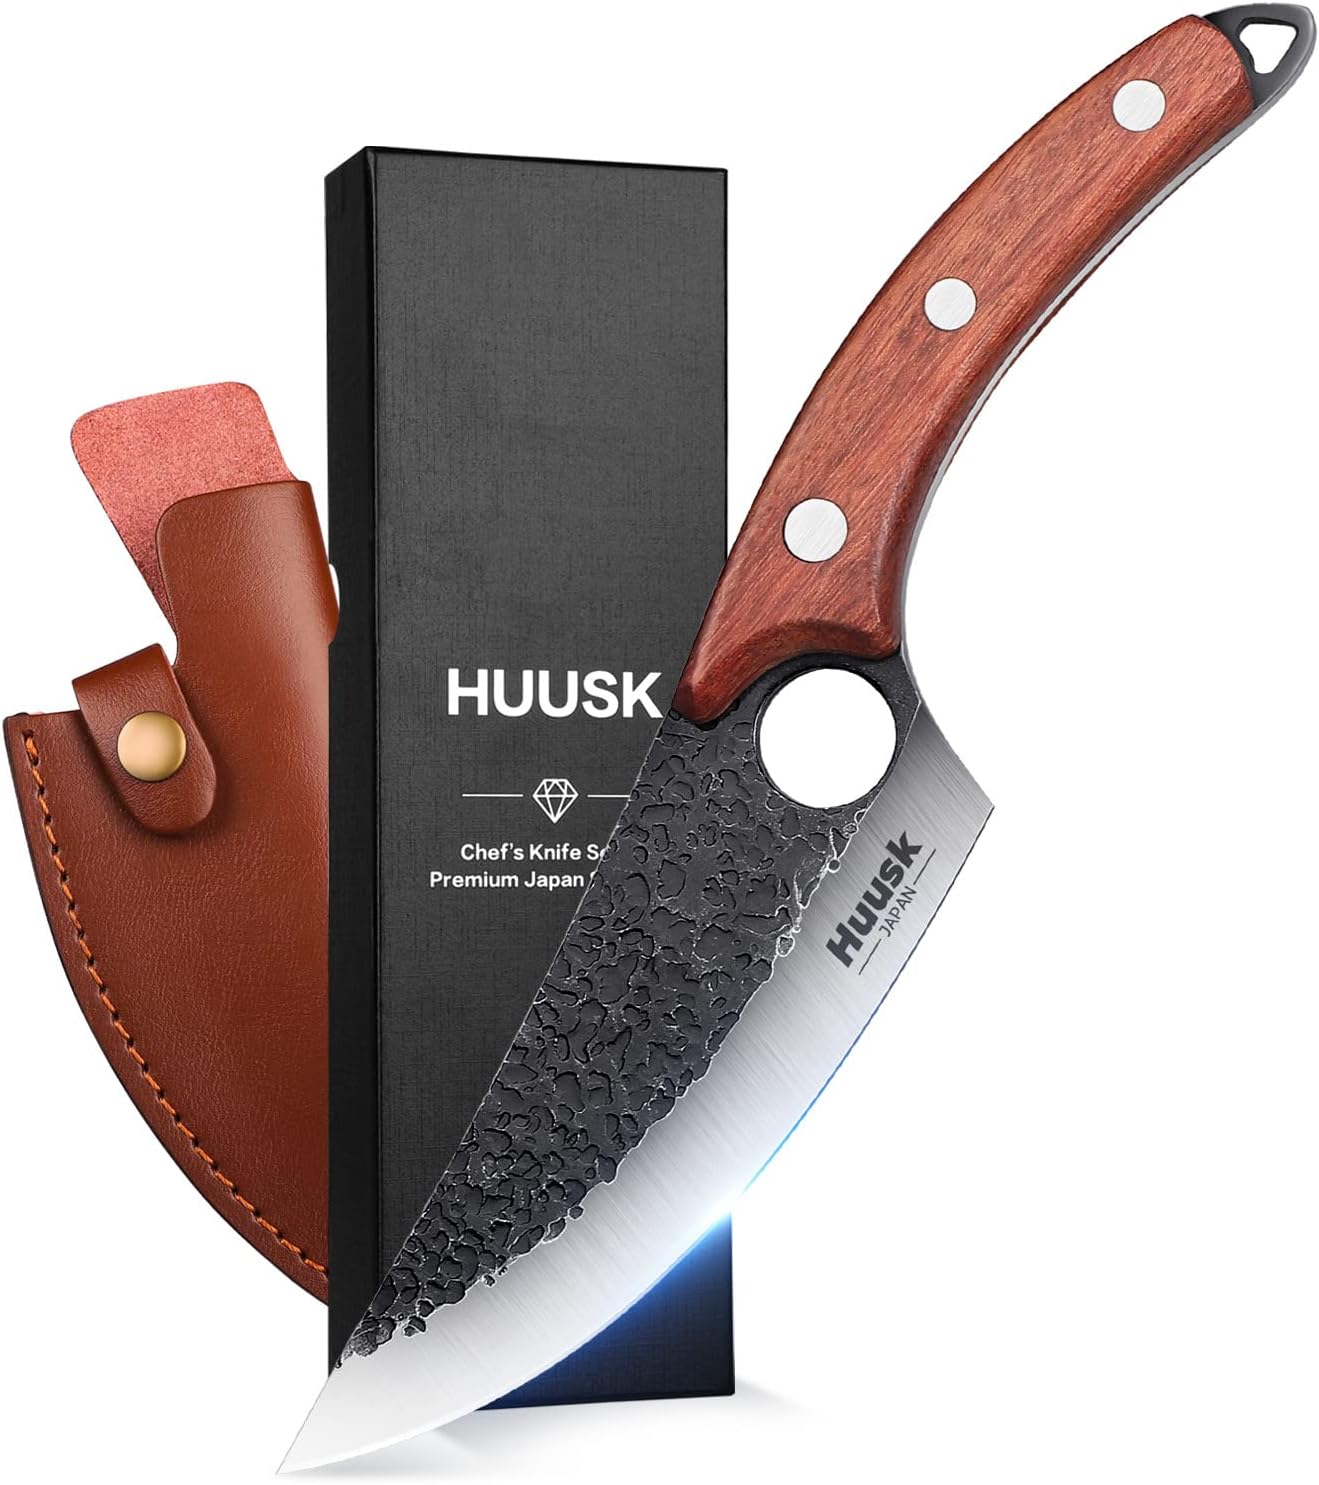 Huusk Viking Knives Hand Forged Boning Knife Full Tang Japanese Chef Knife